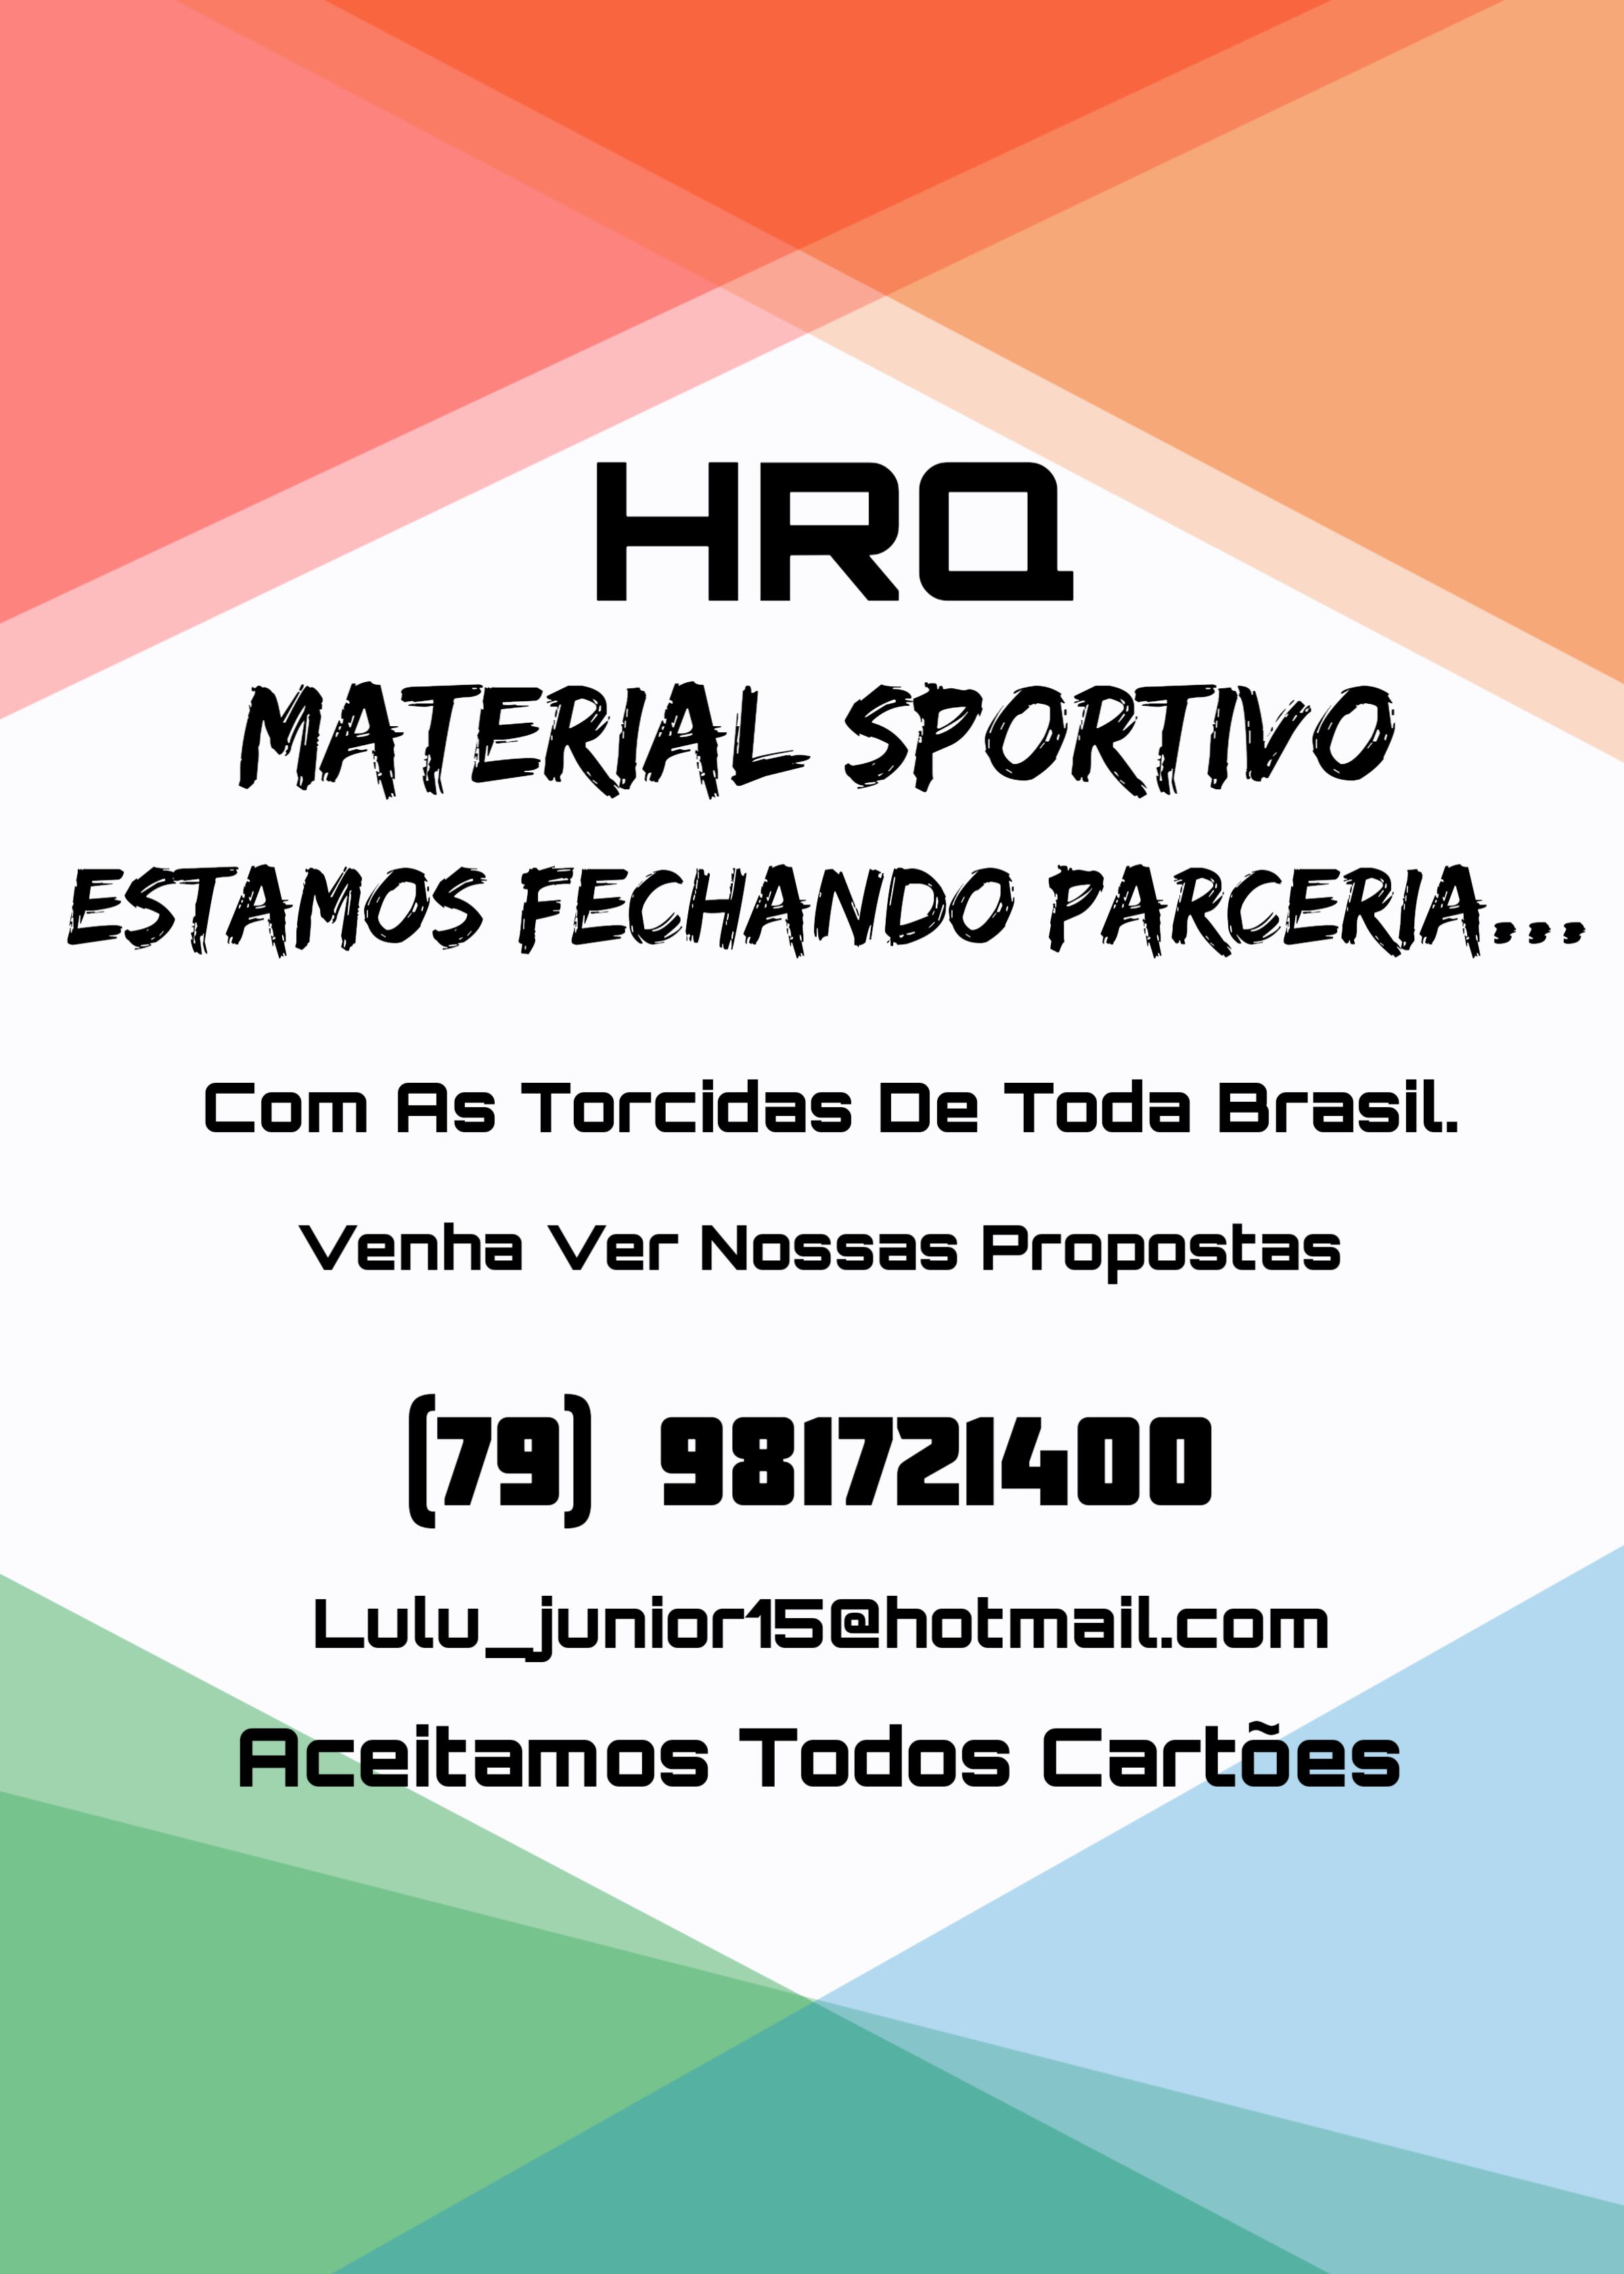 HRQ Material Sportivo